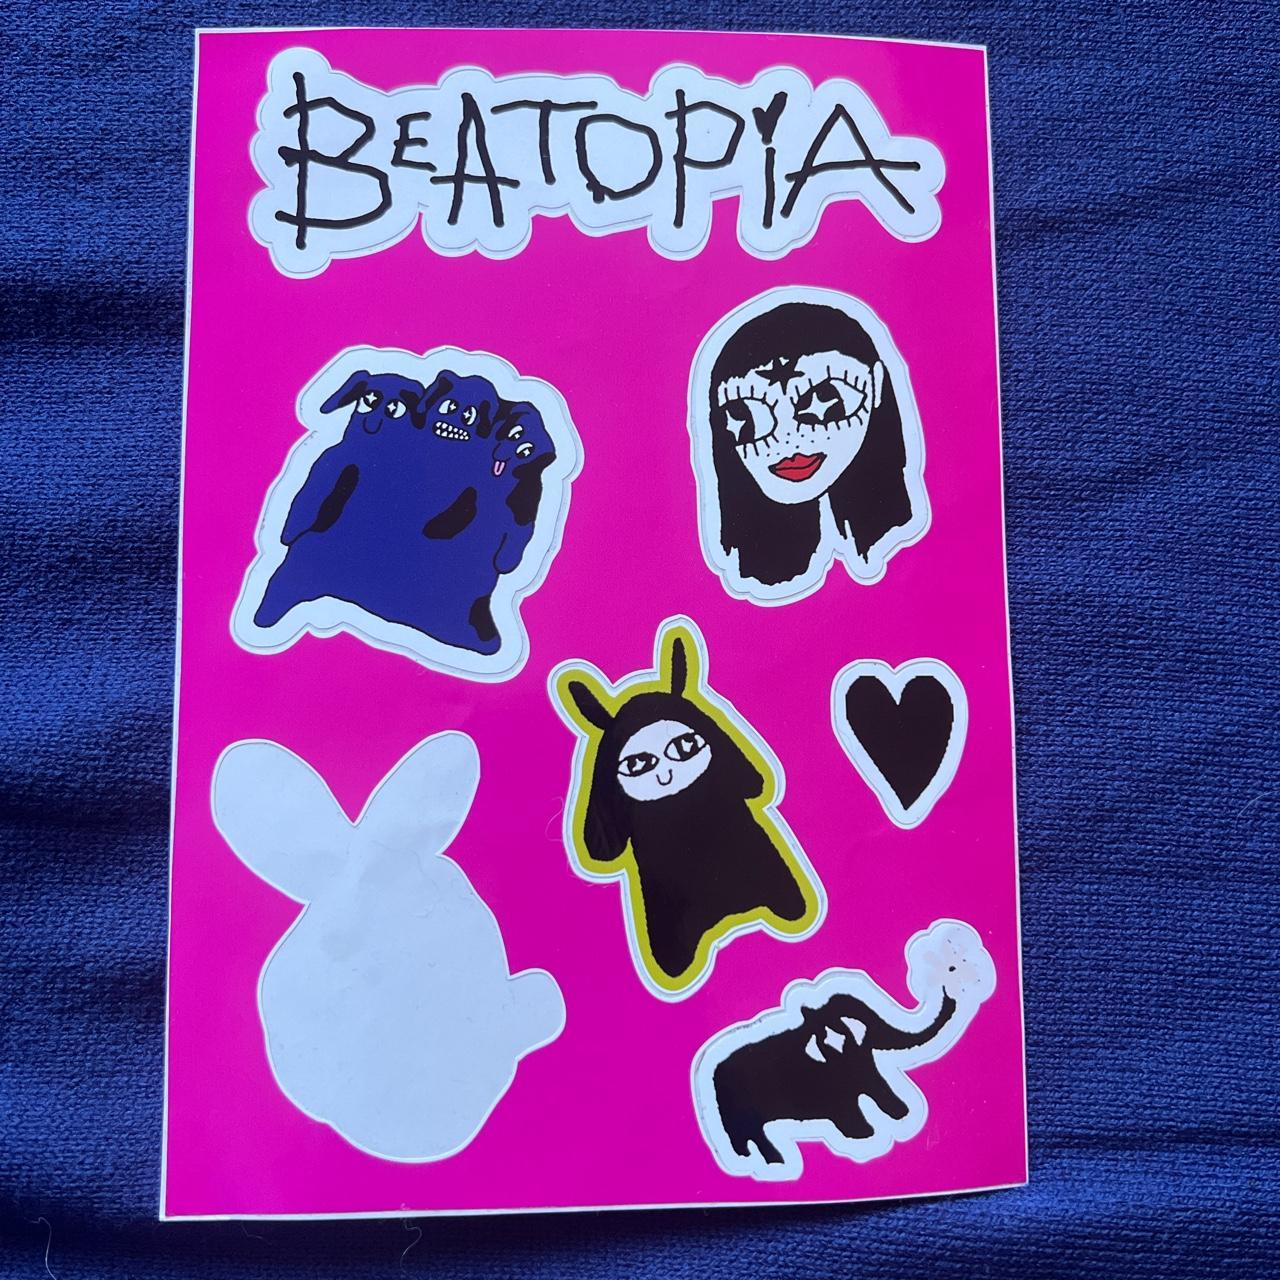 beabadoobee on X: sick new beatopia knitwear by Annie Hall